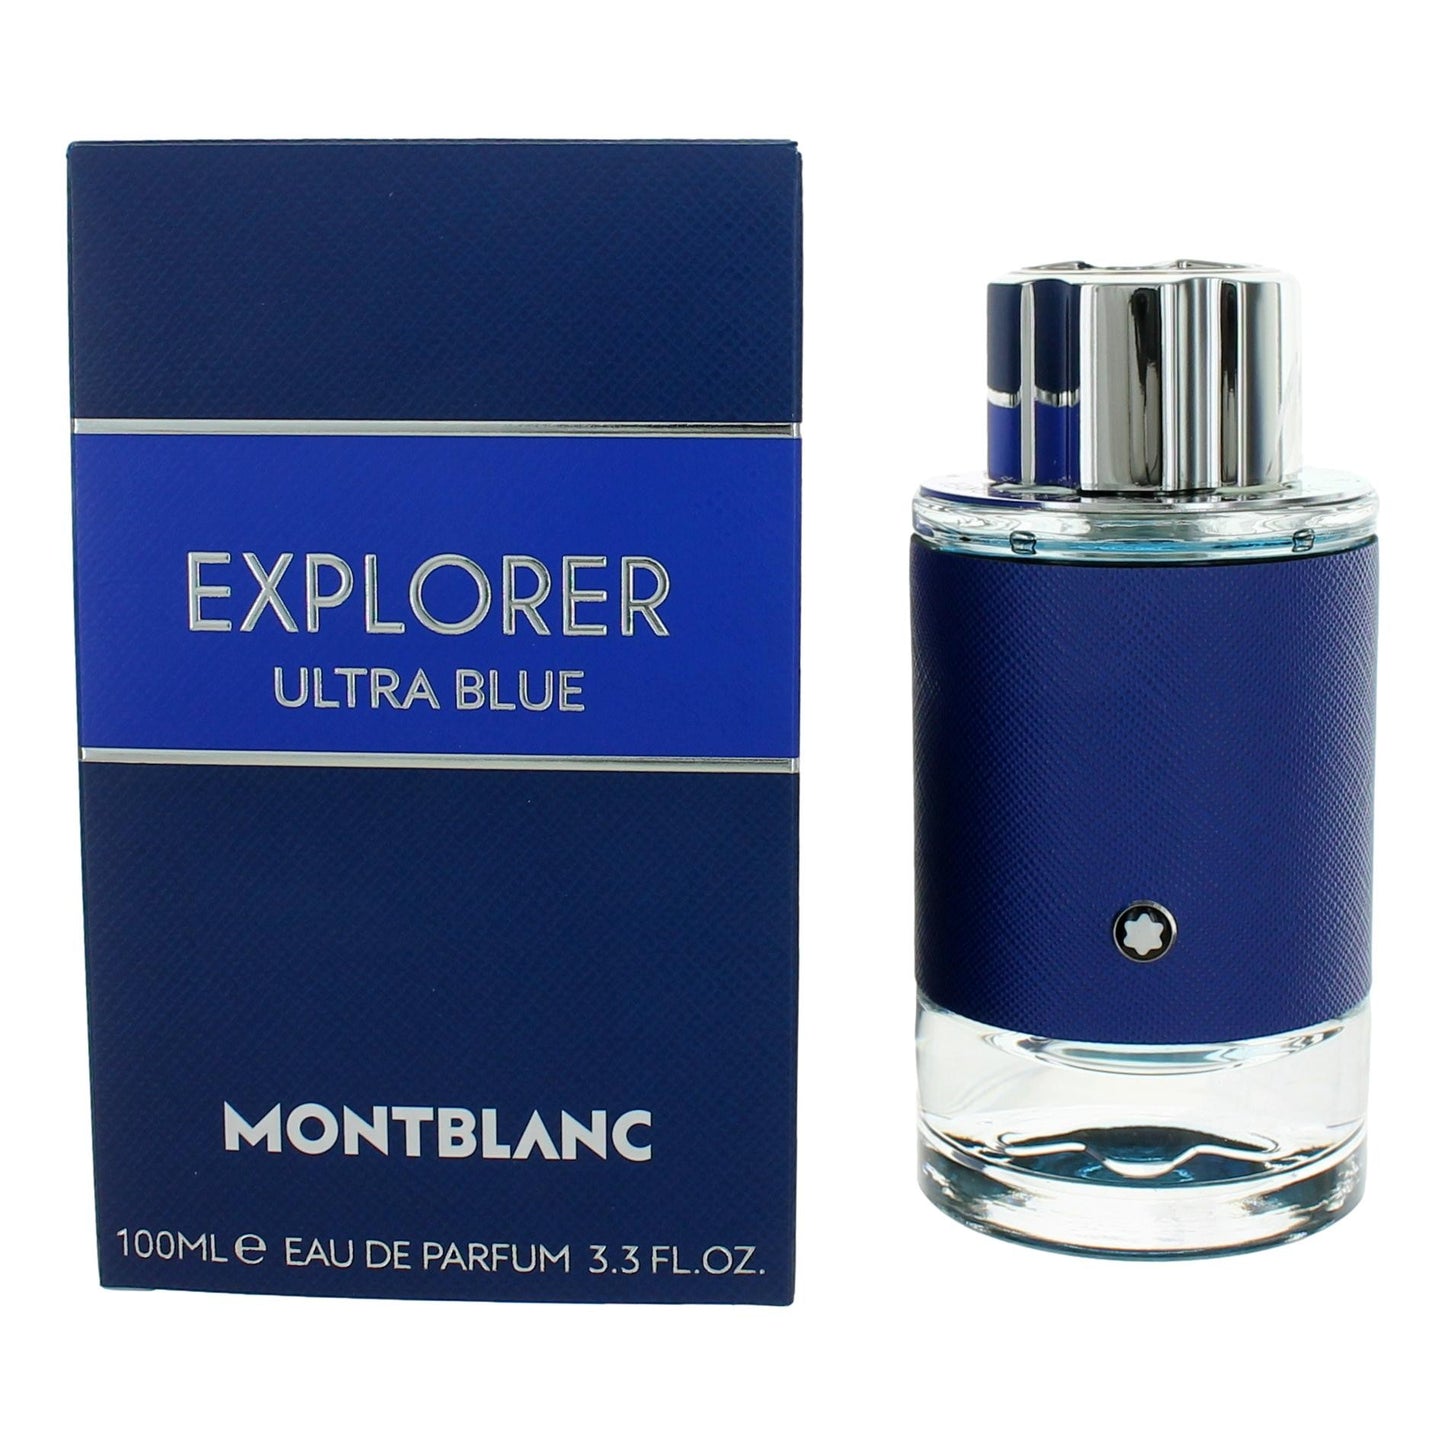 Explorer Ultra Blue by Mont Blanc